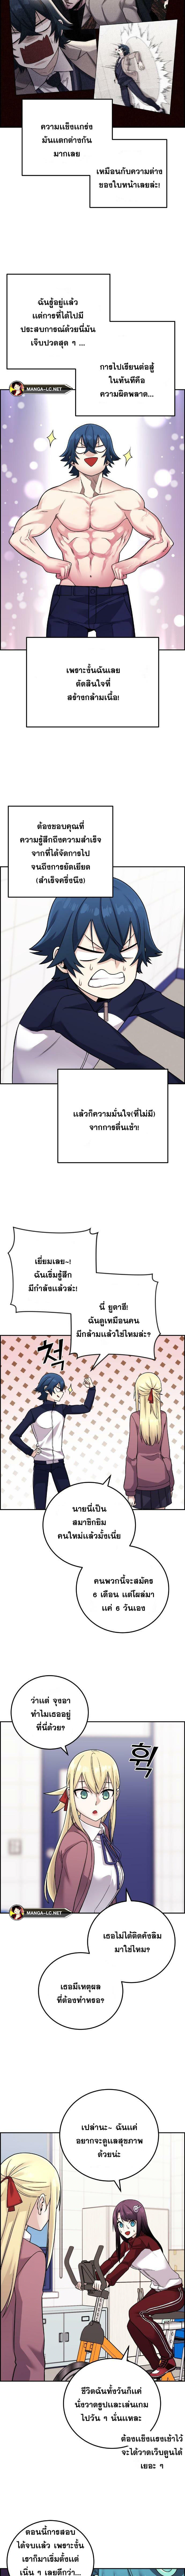 Webtoon Character Na Kang Lim ร ยธโ€ขร ยธยญร ยธโขร ยธโ€”ร ยธยตร ยนห 31 (6)